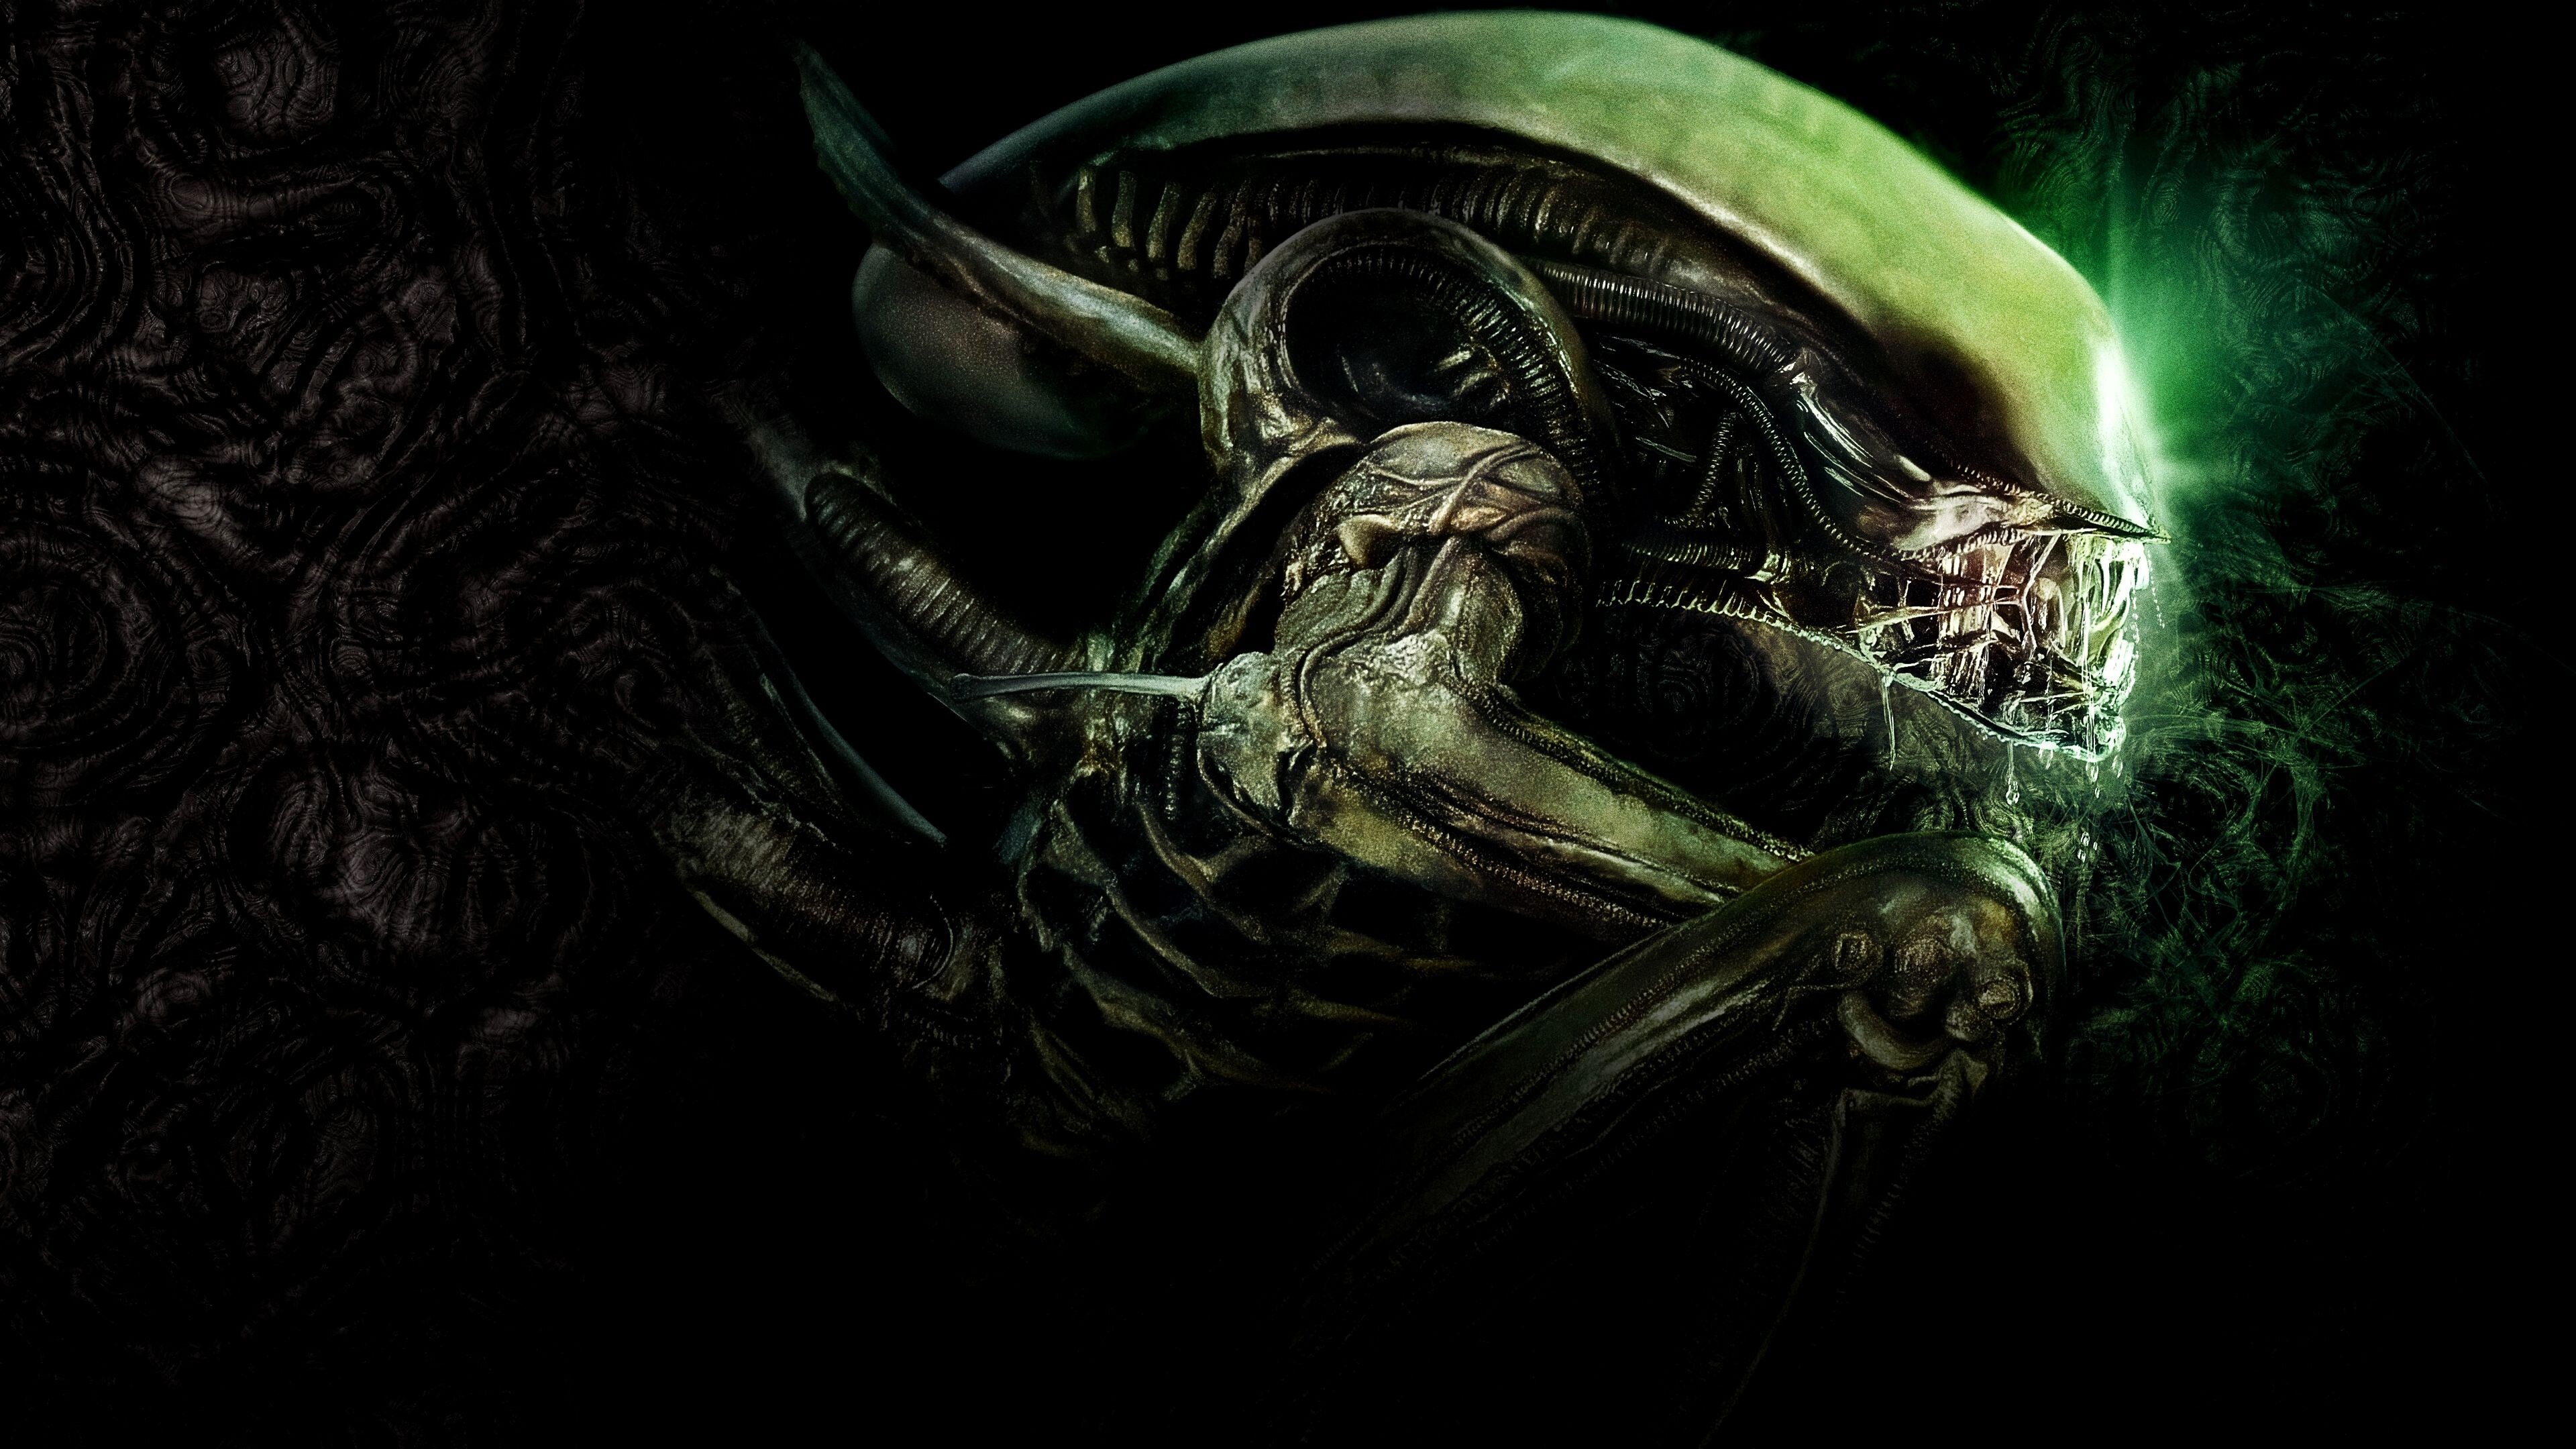 H.R. Giger: Xenomorph, Chitinous Armored Body, "Aliens" Film. 3840x2160 4K Wallpaper.